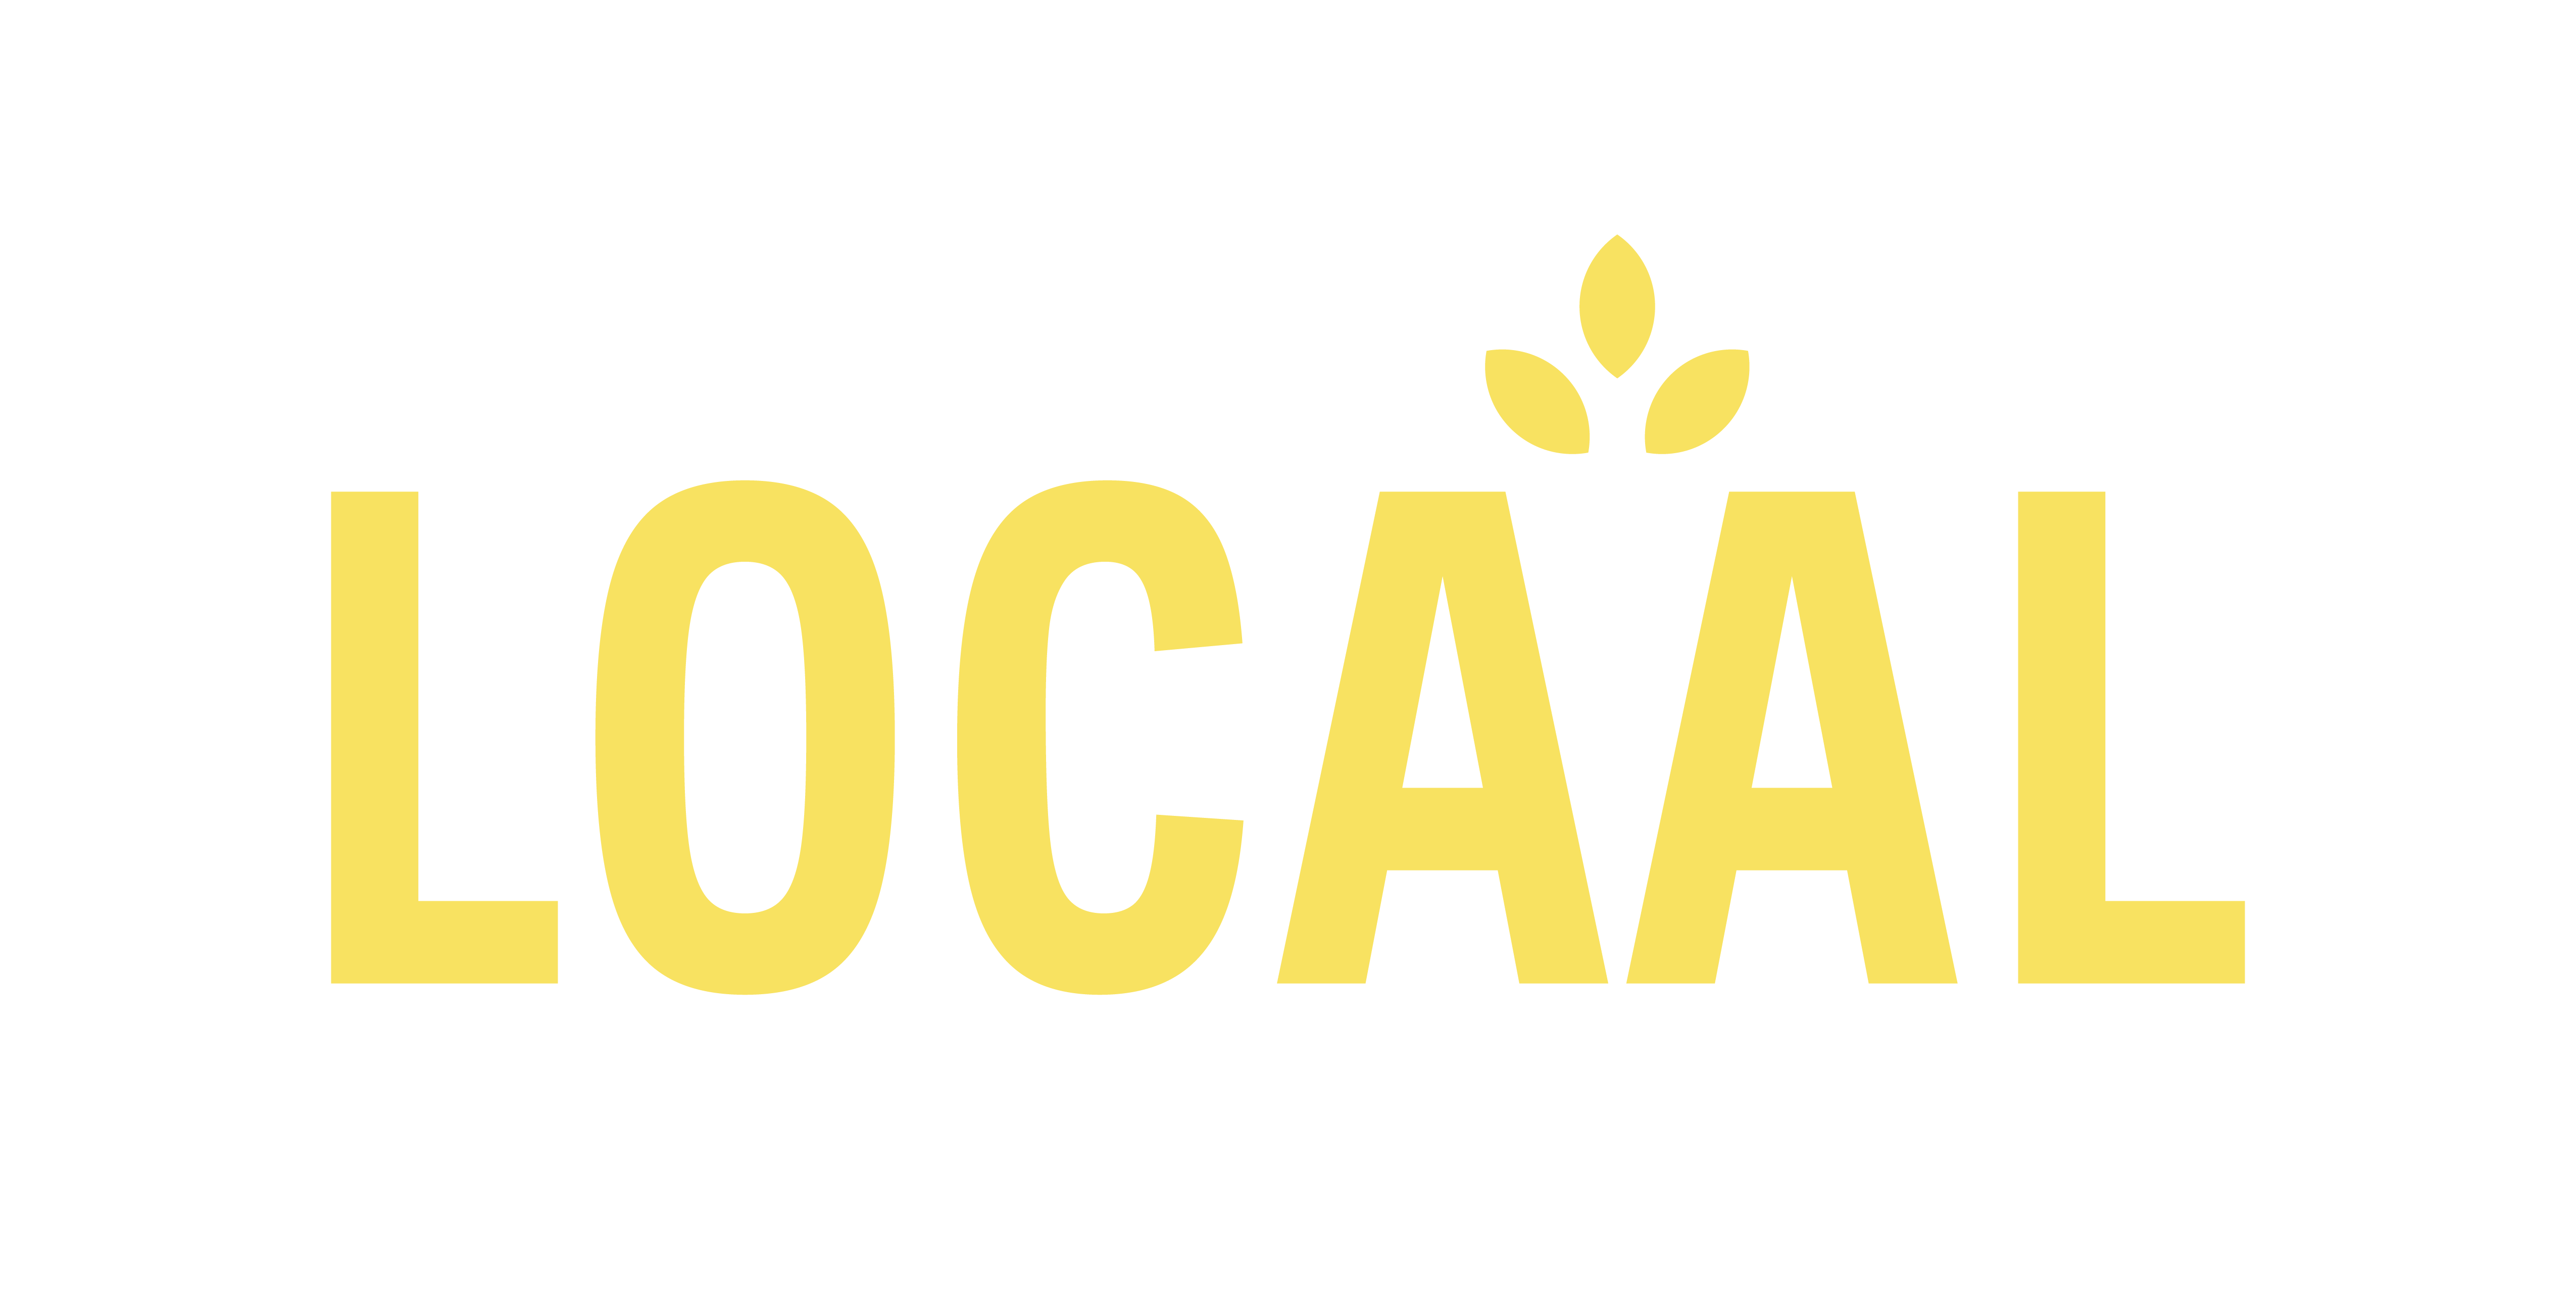 LOCAAL logo jaune rvb